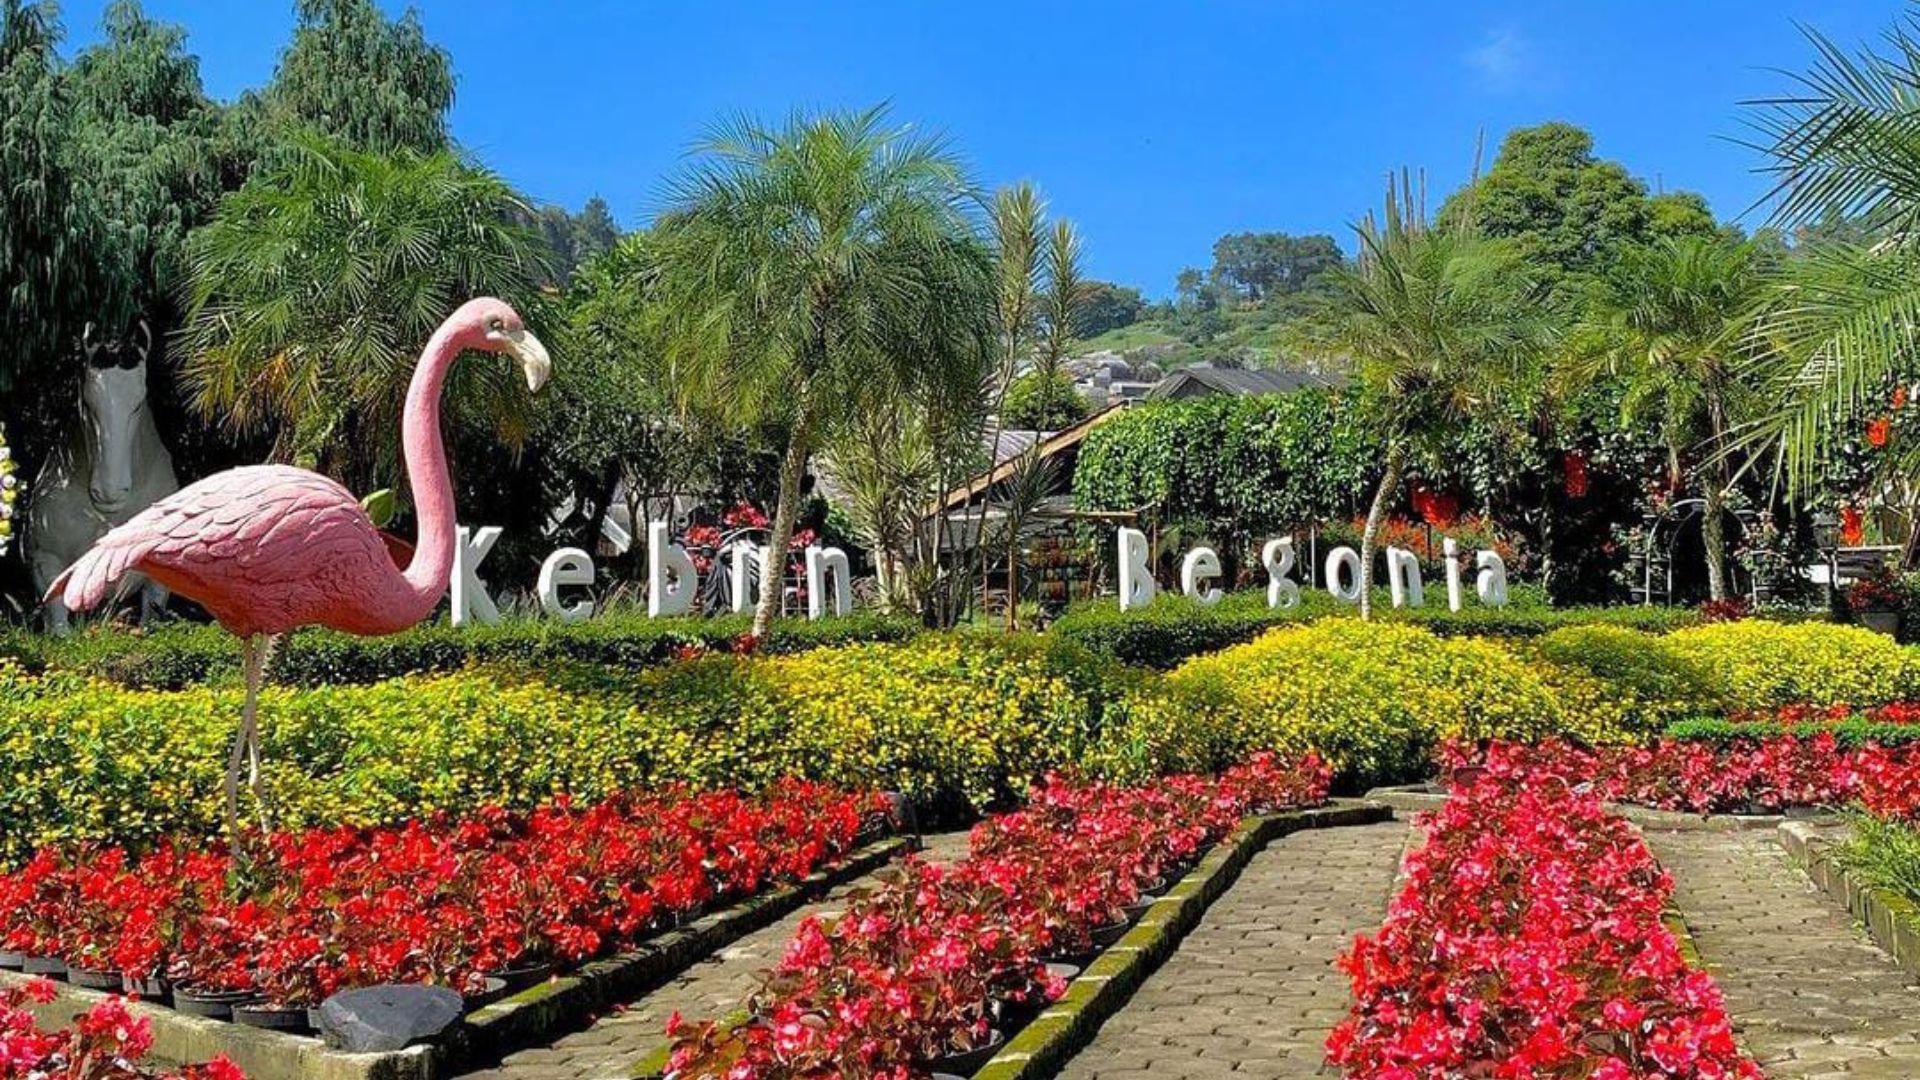 Kebun Begonia, berlokasi di Jalan Maribaya No.120 A, Lembang, Bandung Barat/ Instagram/ @kebunbegonia